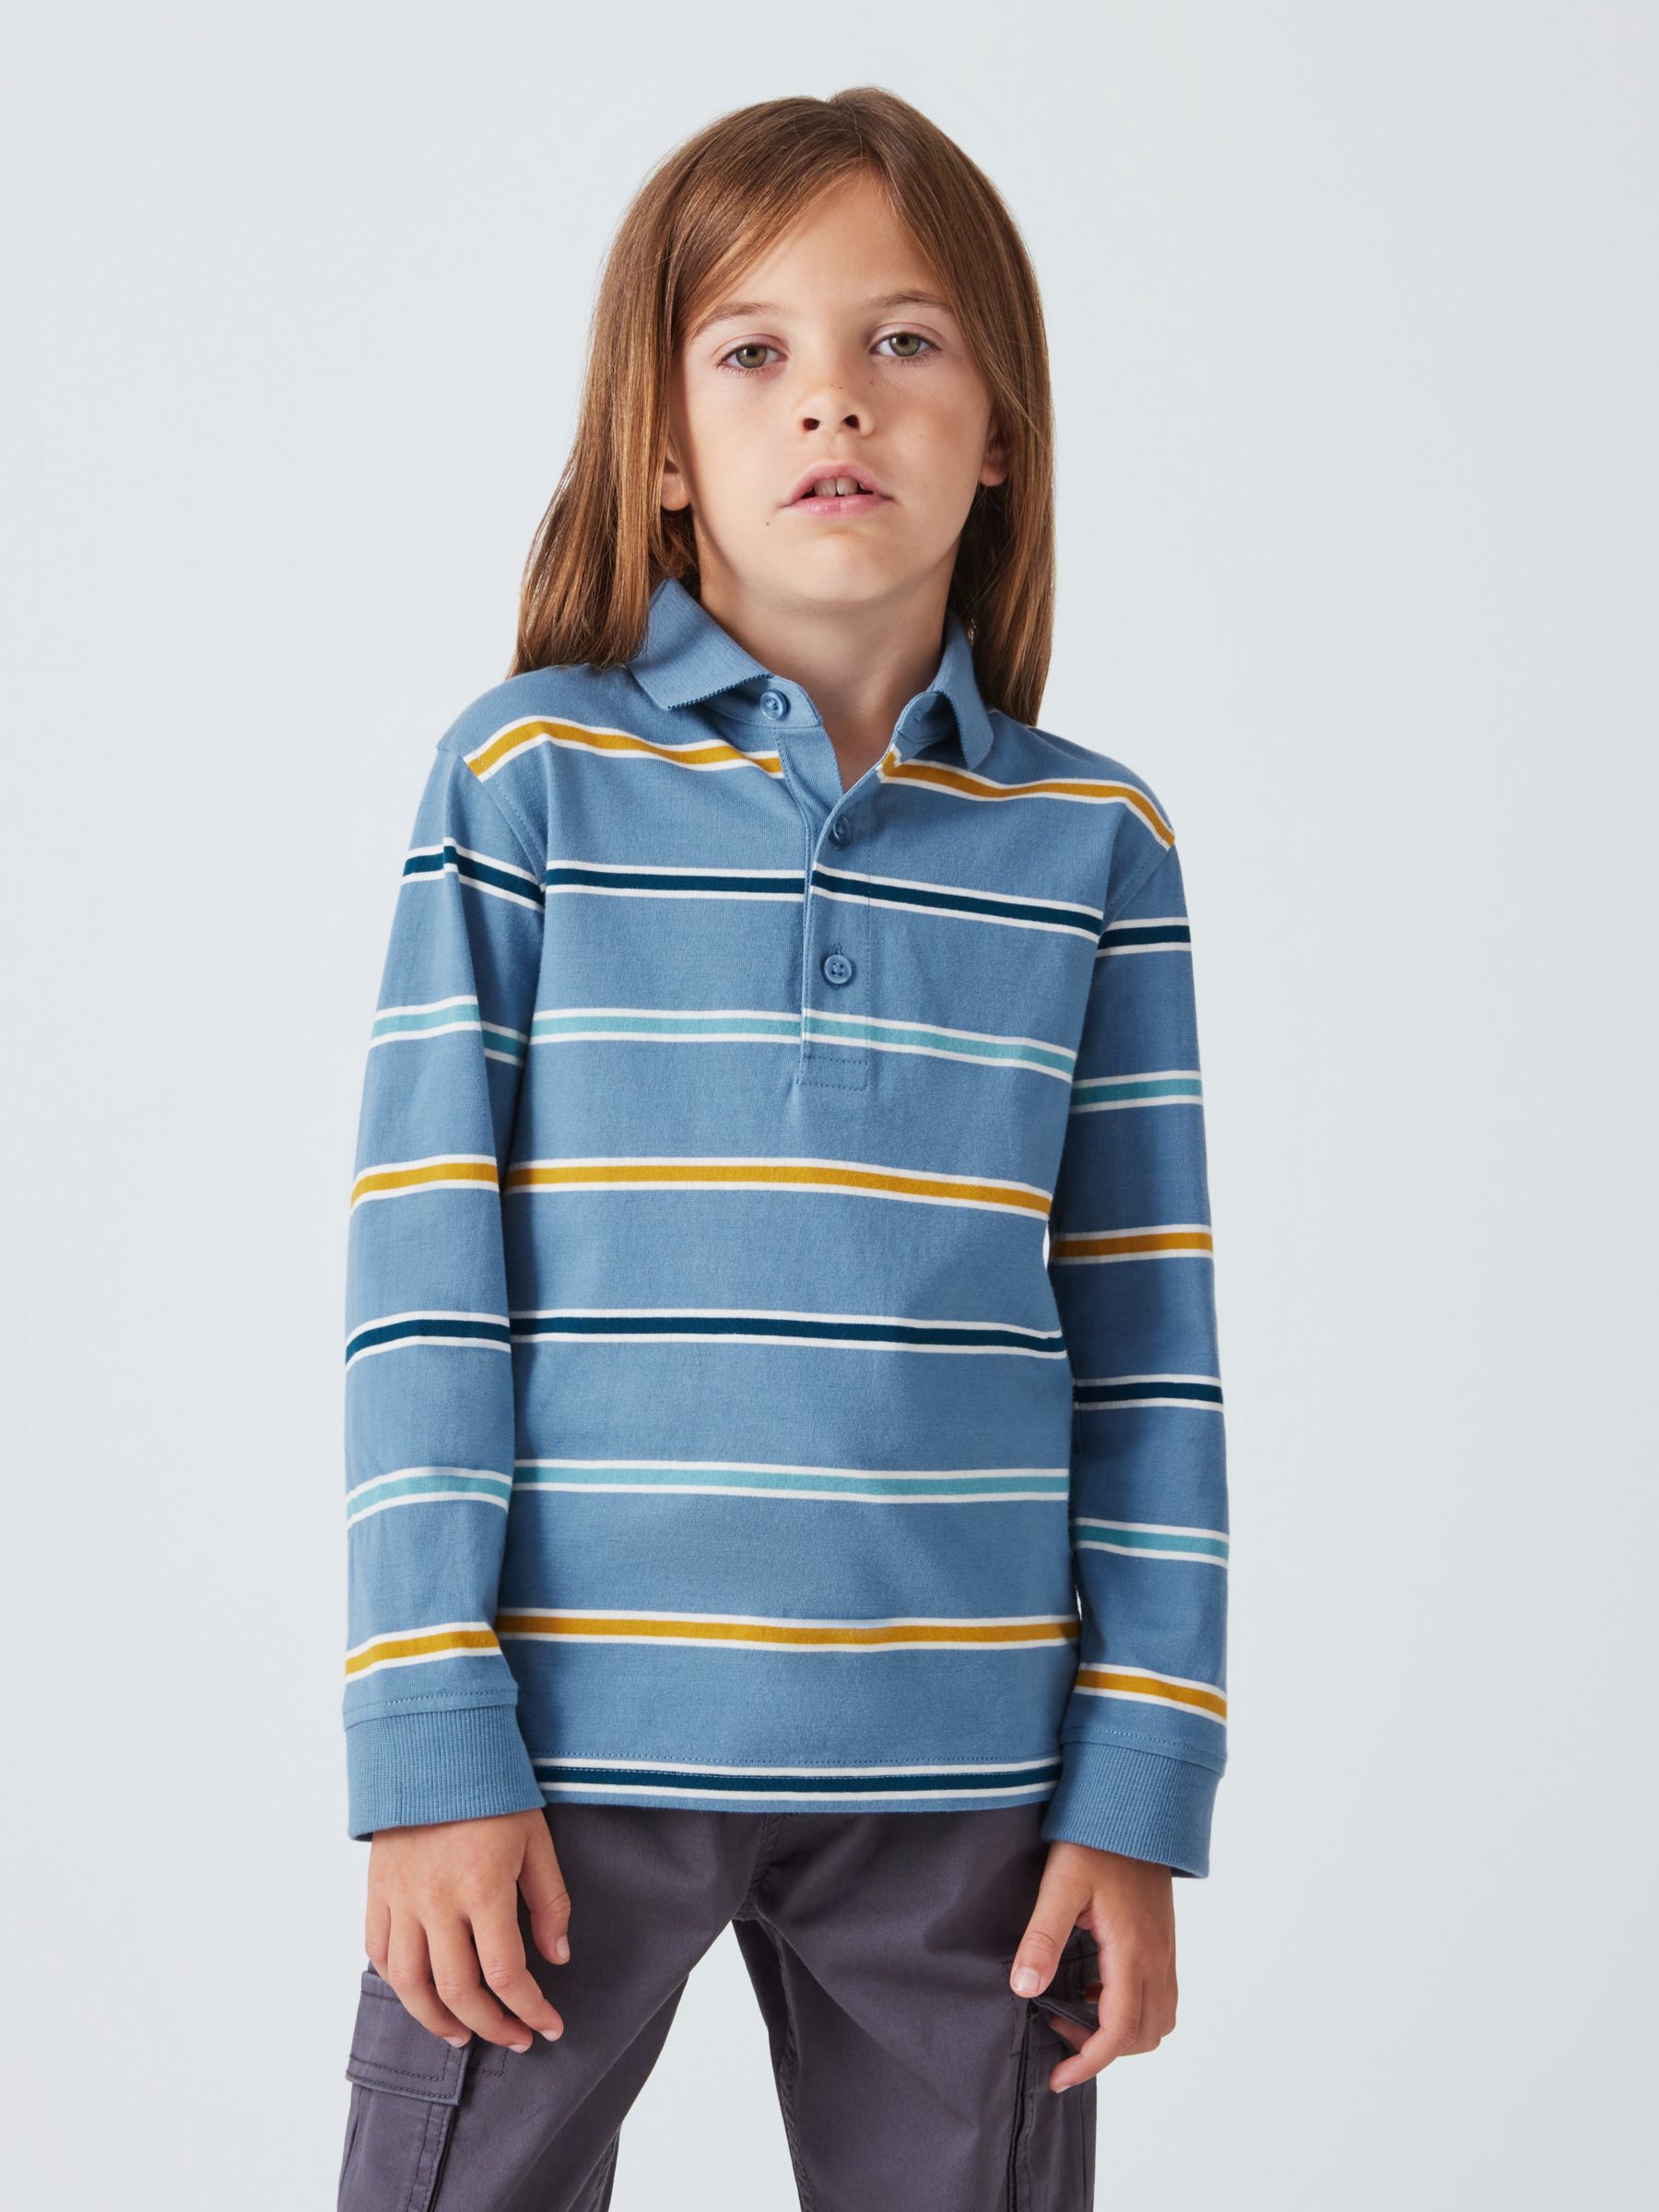 John Lewis Kids' Thin Stripe Polo Shirt, Blue at John Lewis & Partners